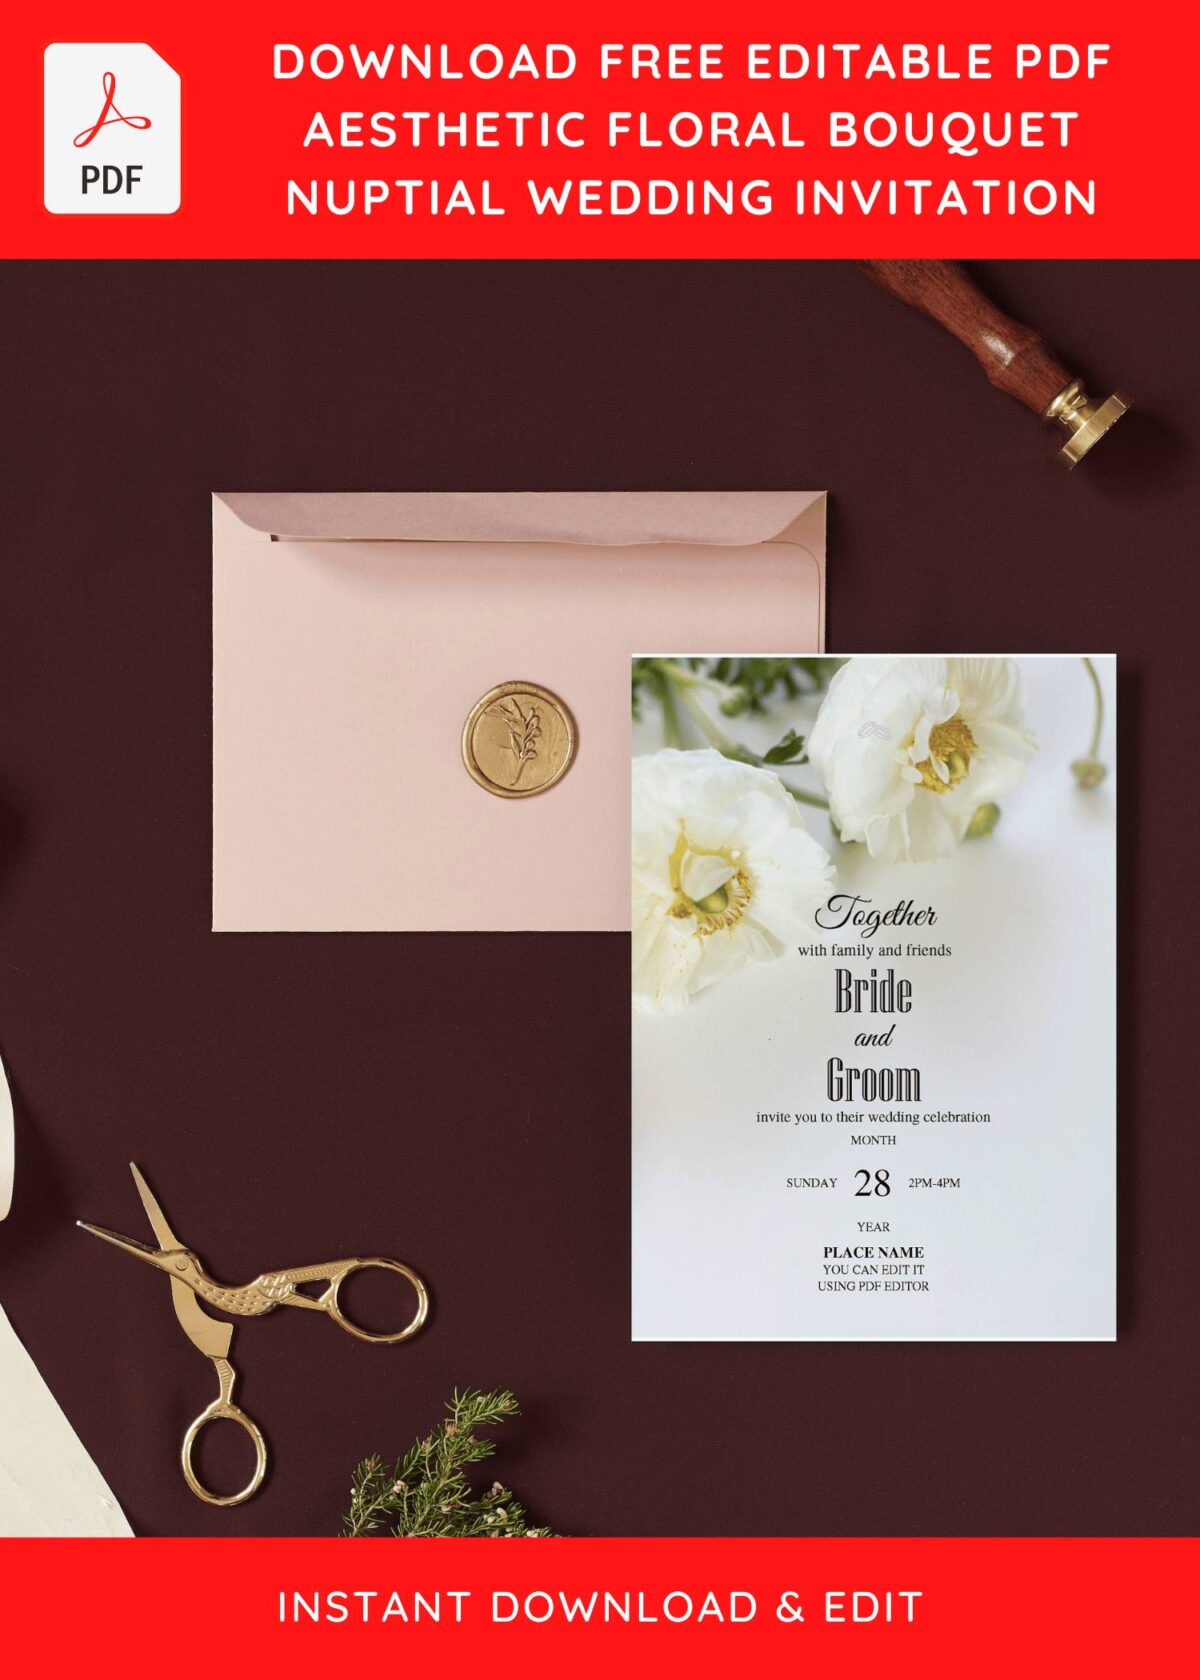 (Free Editable PDF) Pristine White Rose Wedding Invitation Templates with elegant White floral decorations